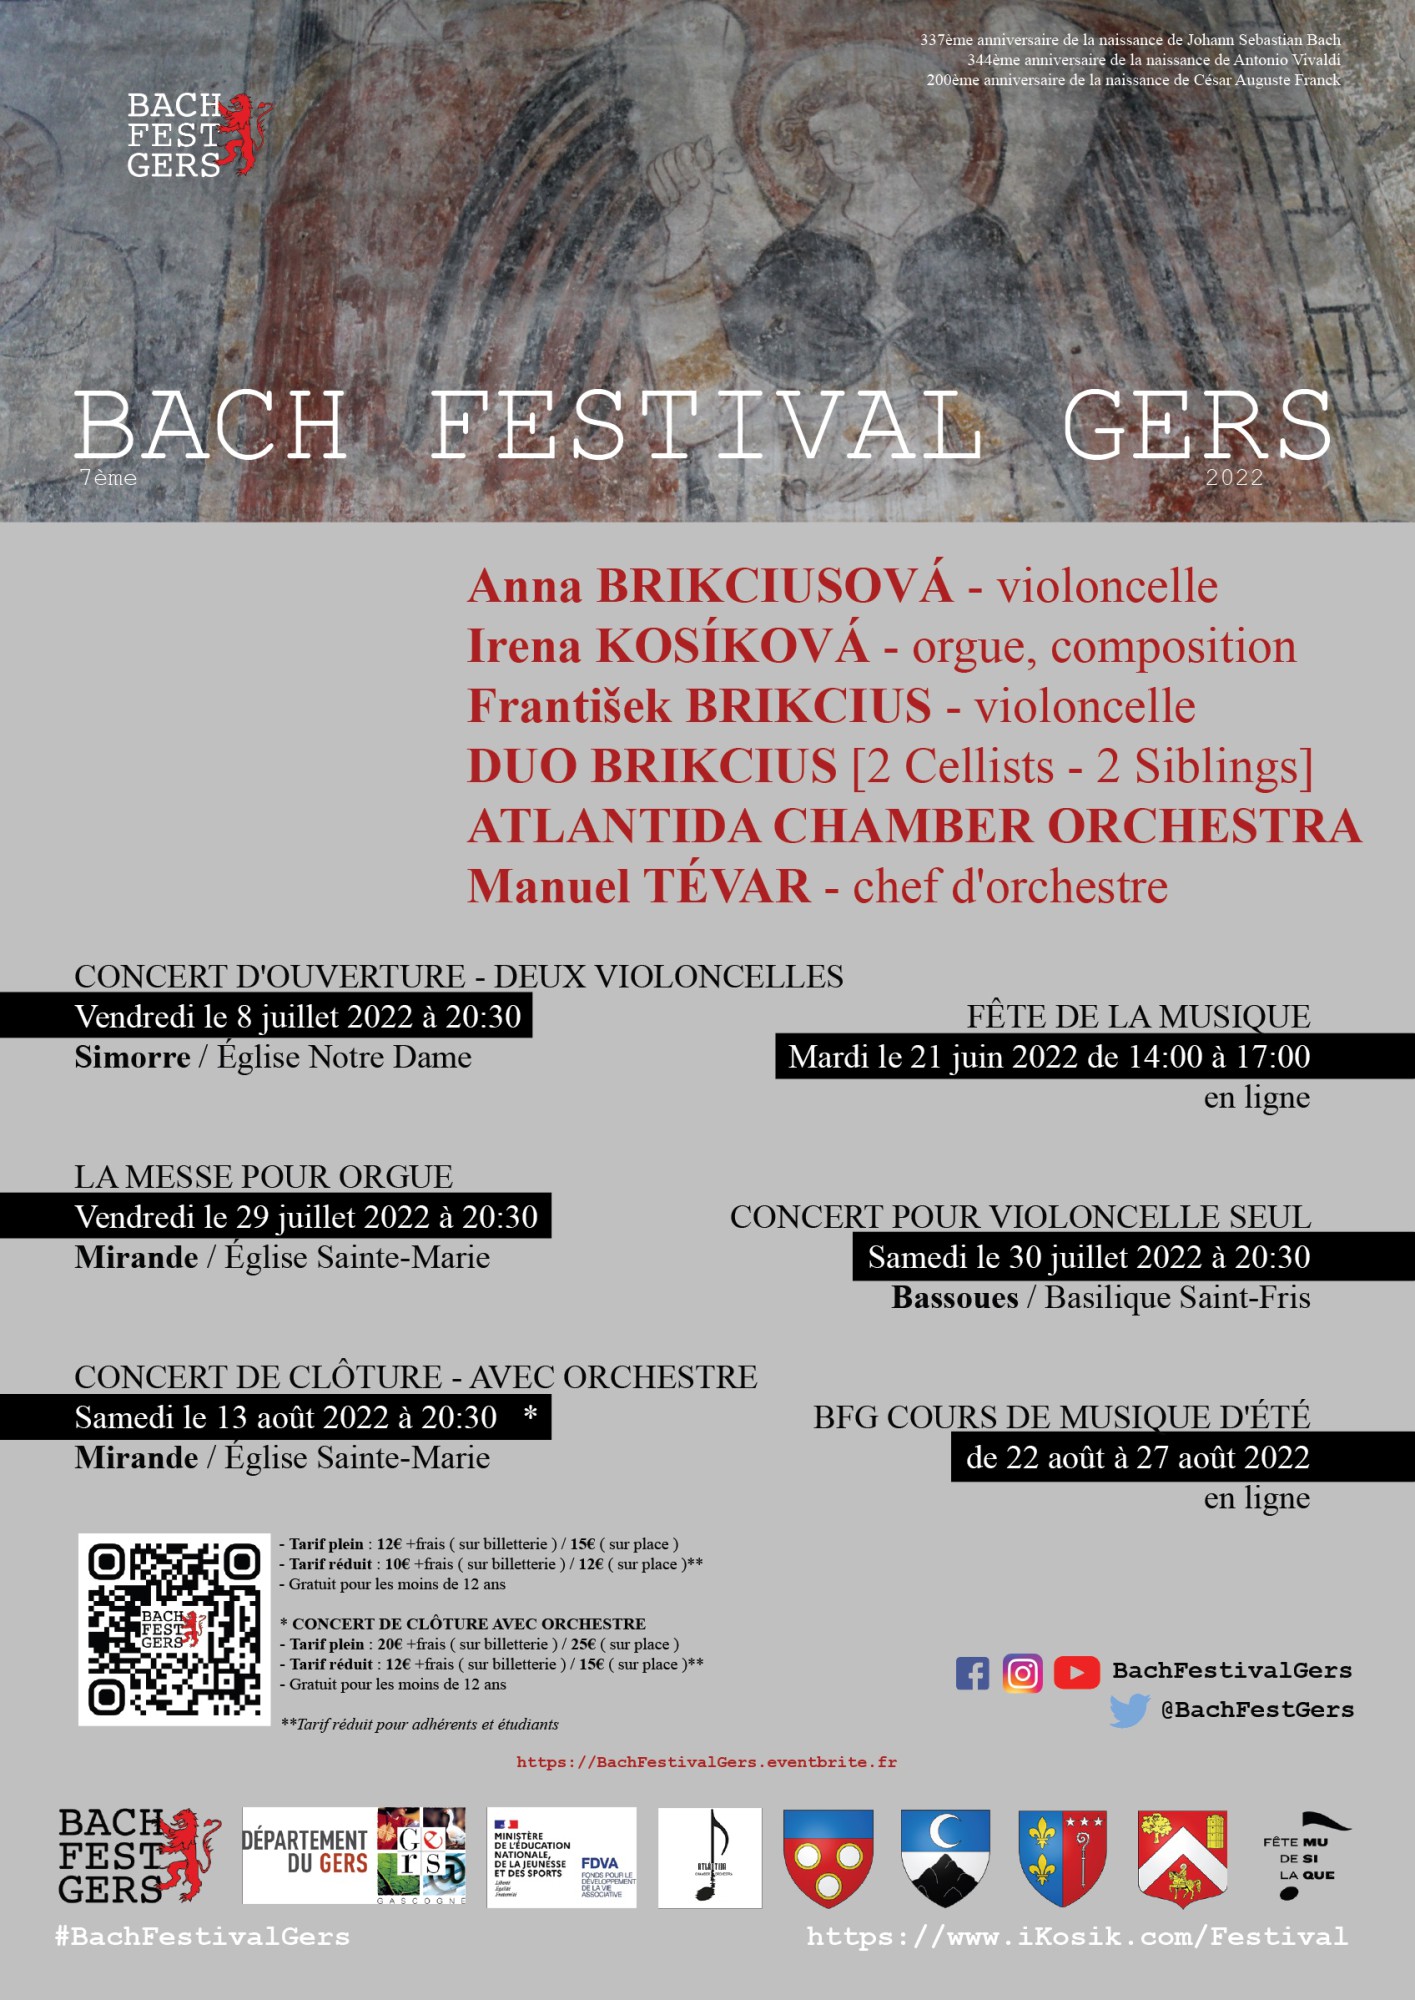 Gers - 7ème cycle Bach festival Gers 2022